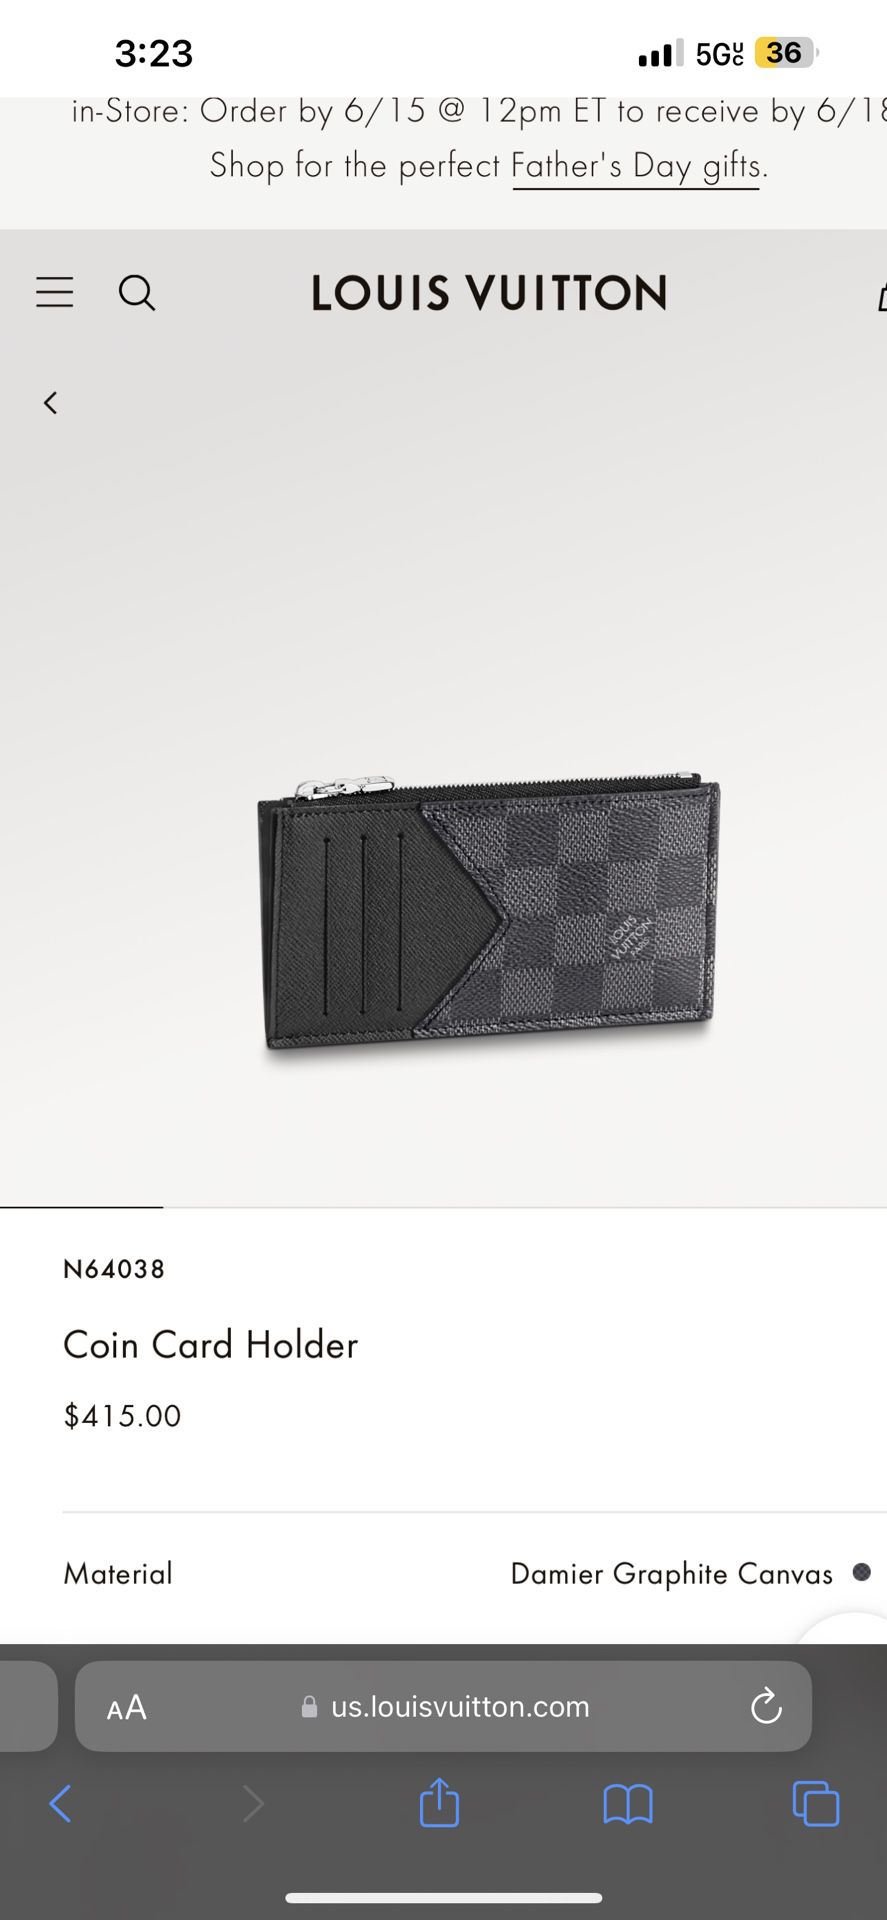 Louis Vuitton N64038 Damier Graphite Canvas Coin Card Holder - The